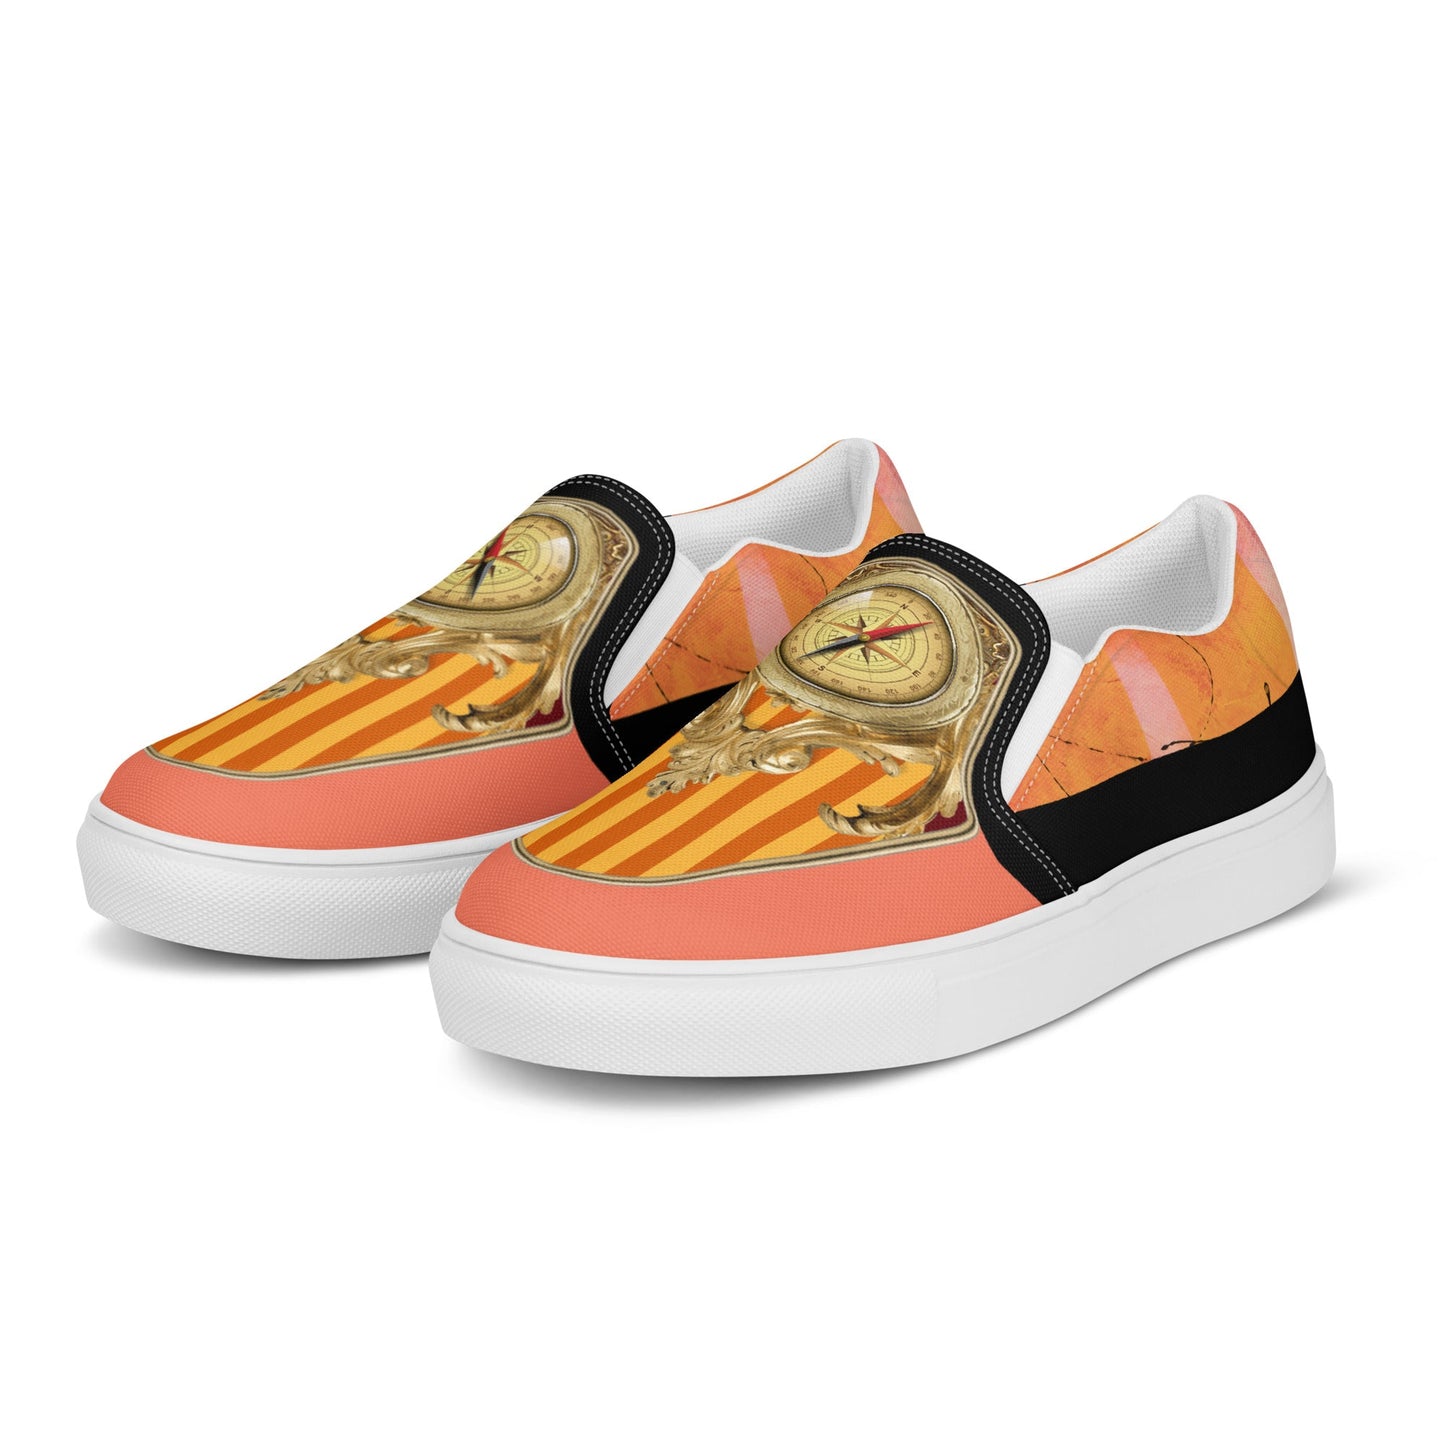 klasneakers Women’s slip-on canvas shoes - Gold Compass